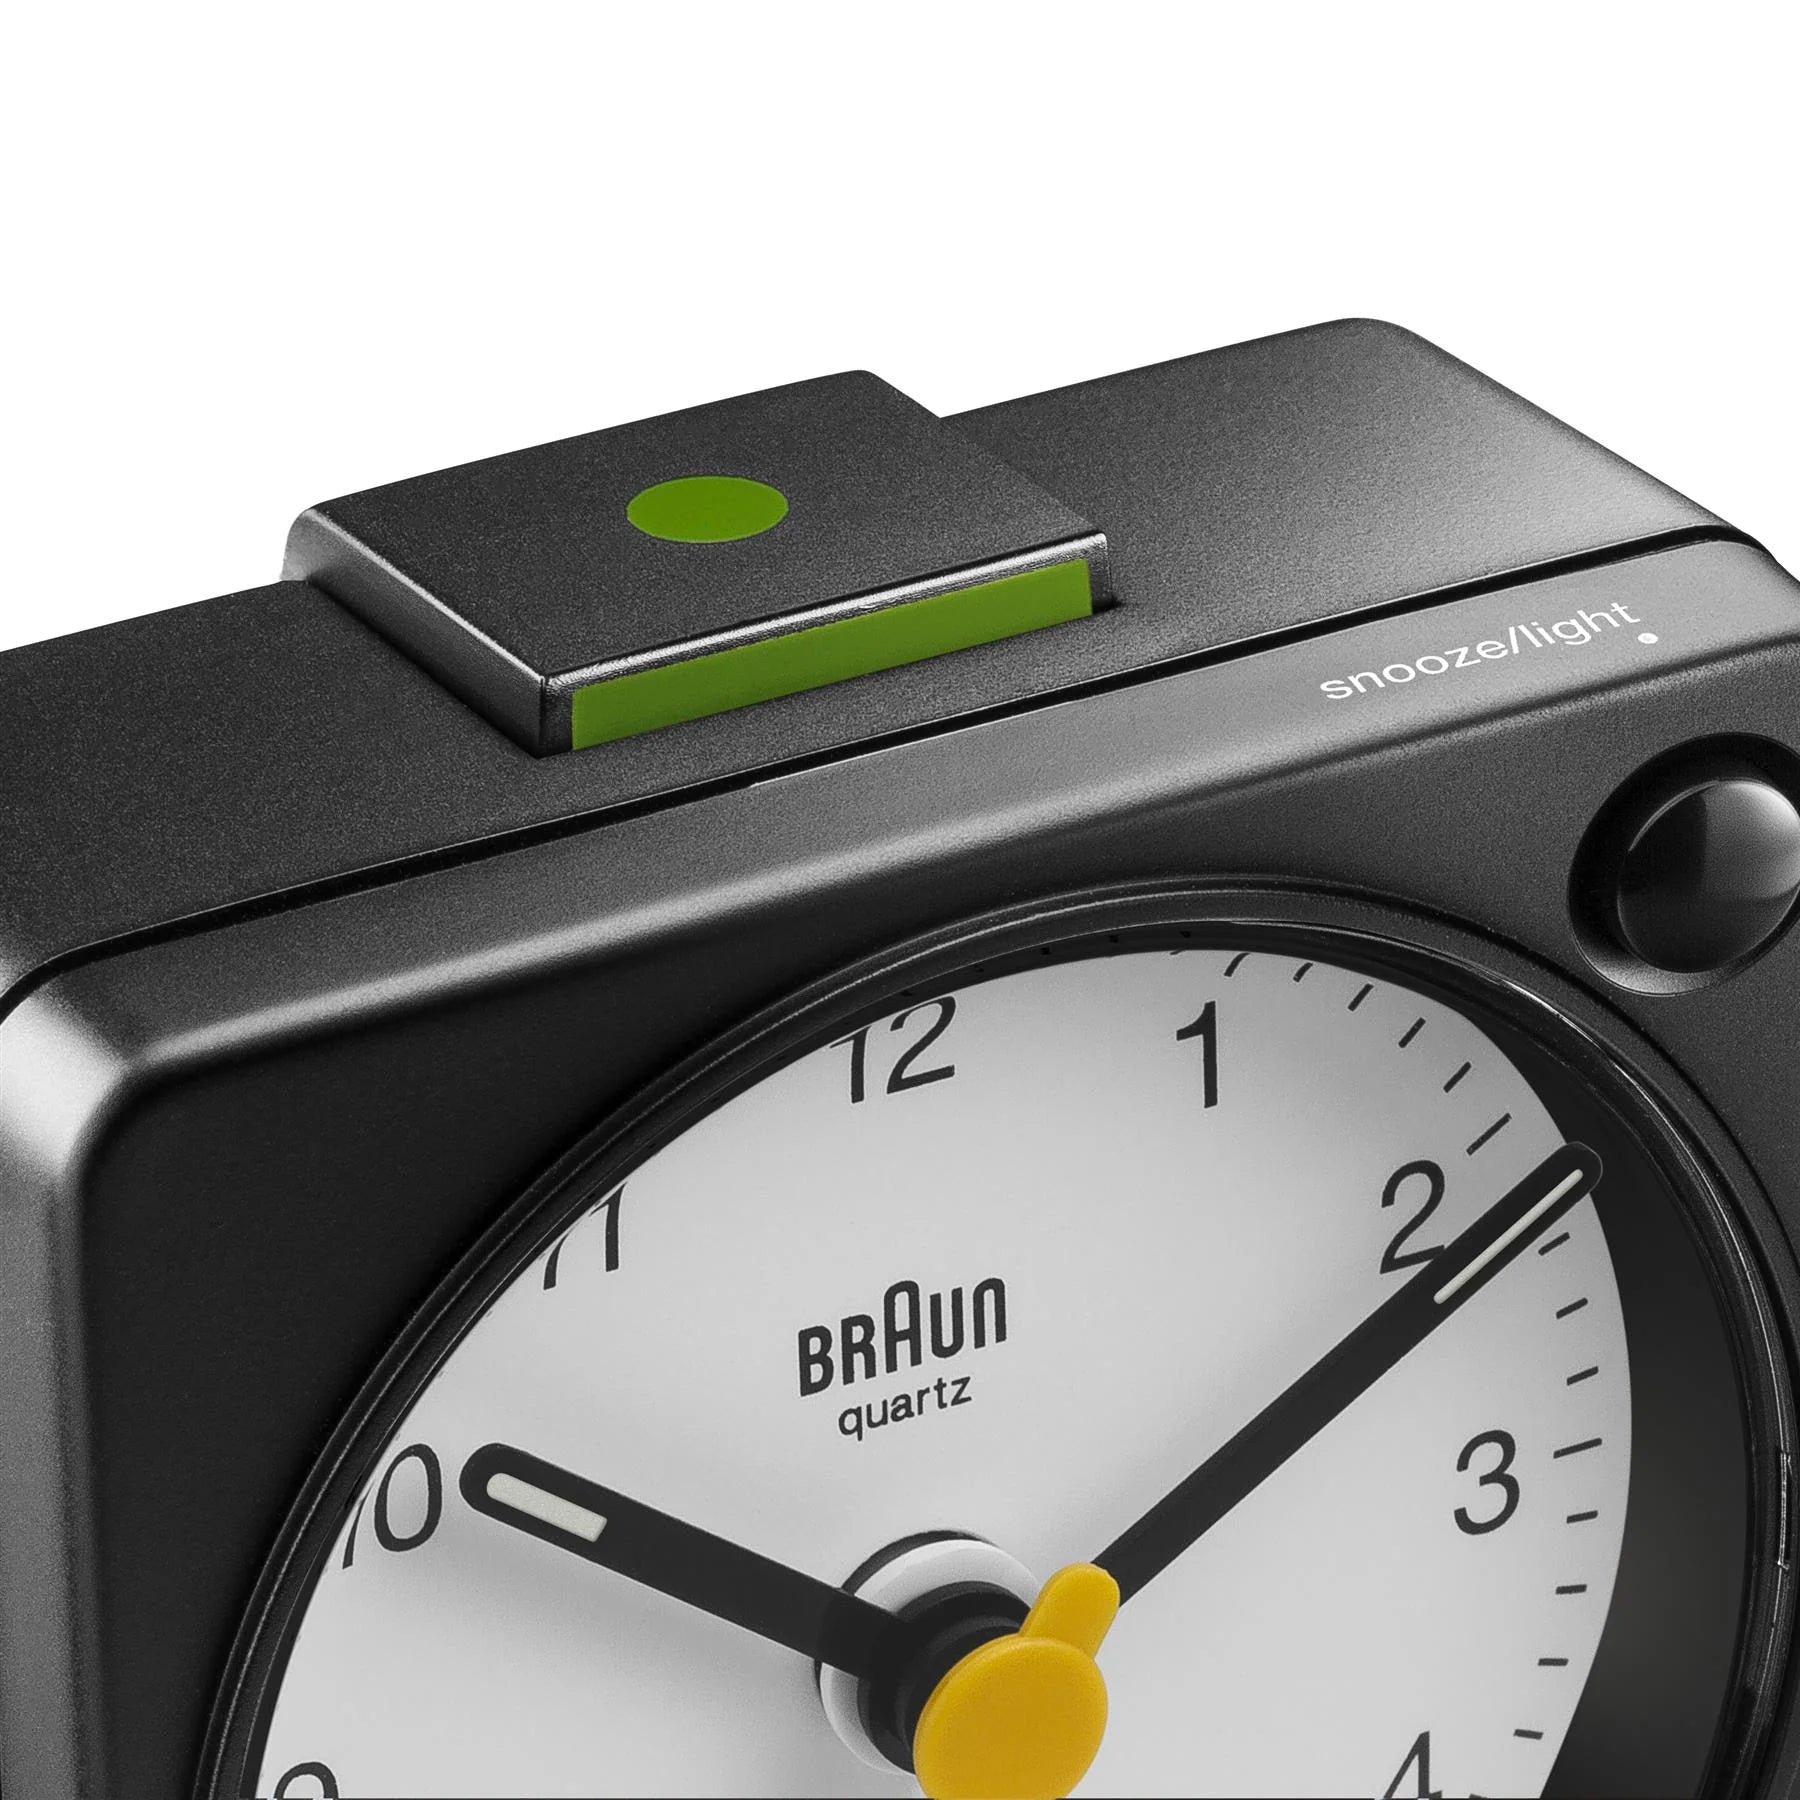 BC02XBW Braun Classic Analogue Travel Alarm Clock - Black & White